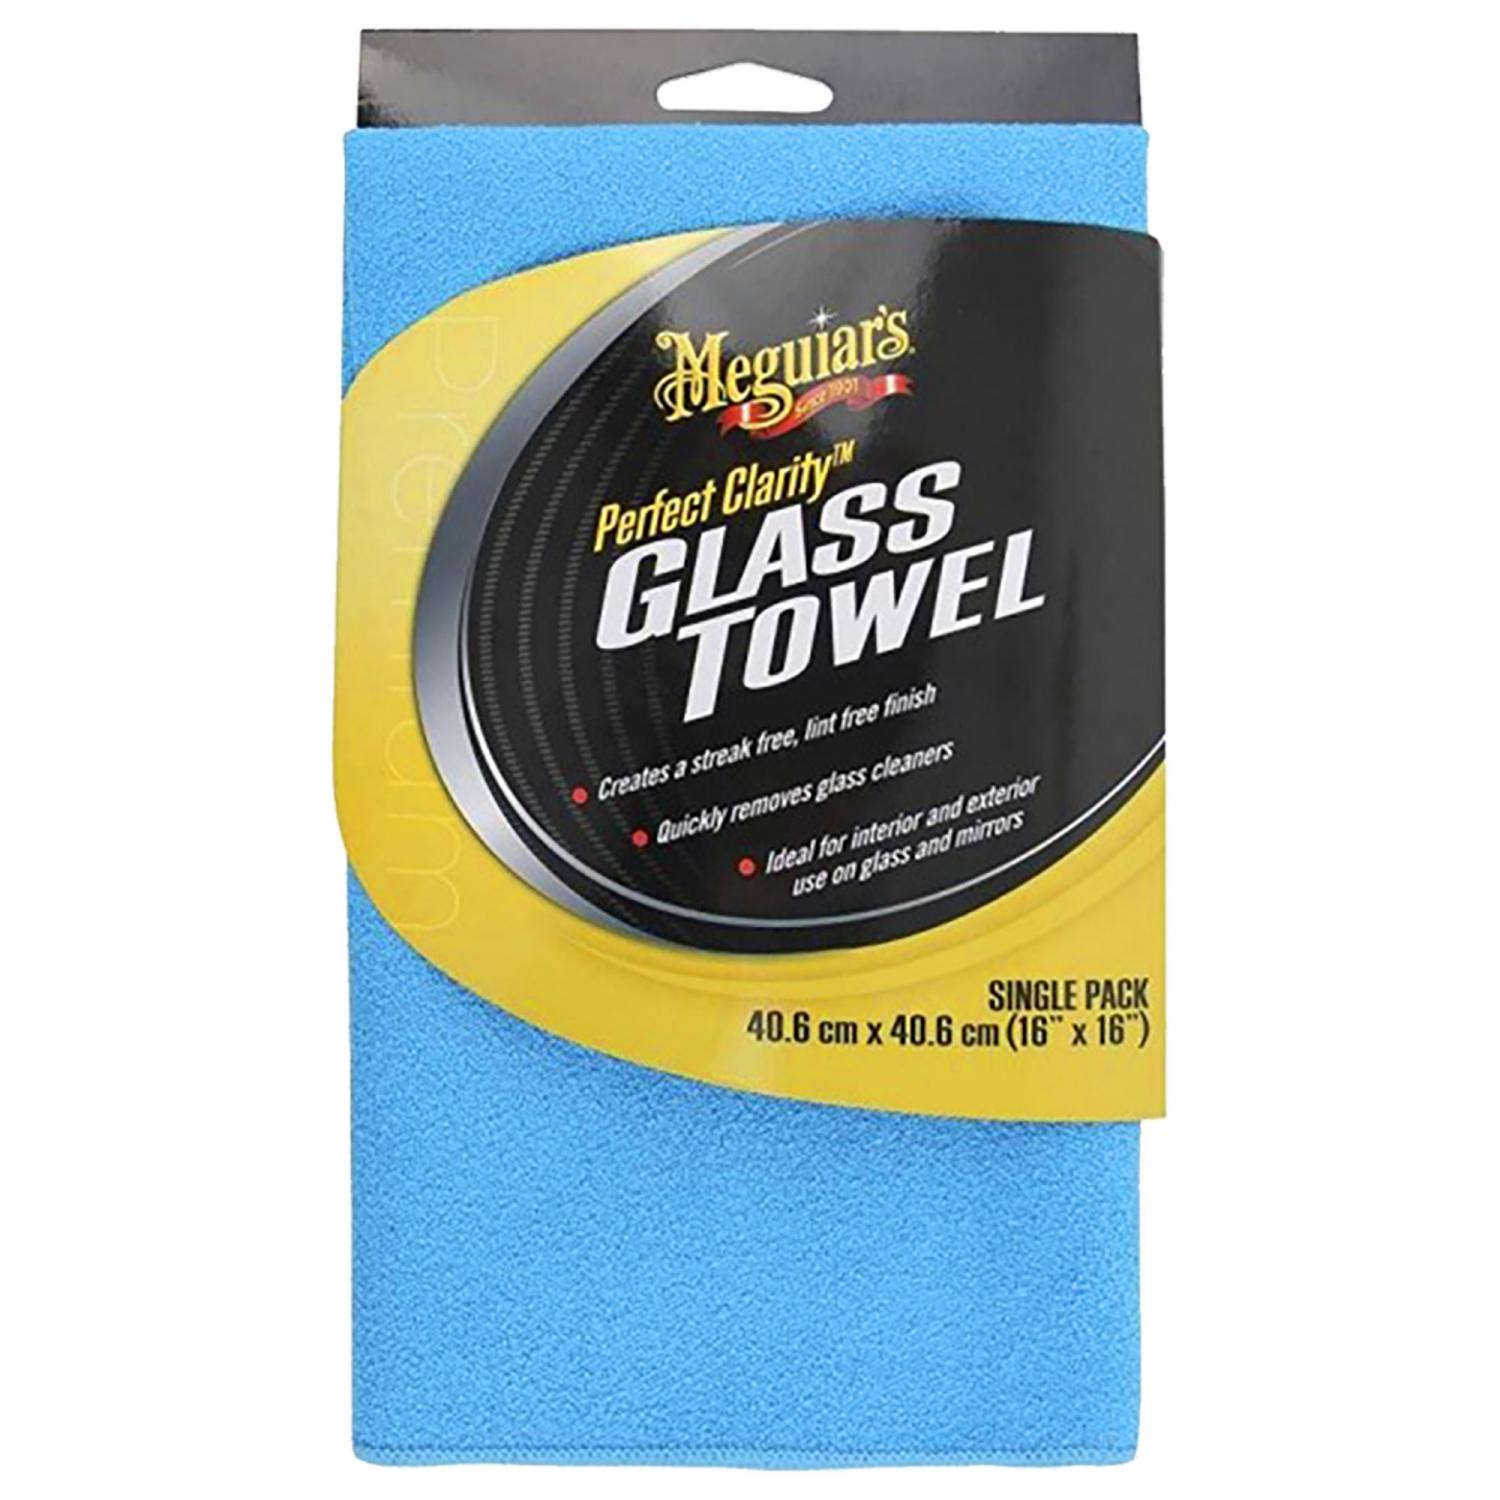 Perfect Clarity Glass Towel  Meguiars